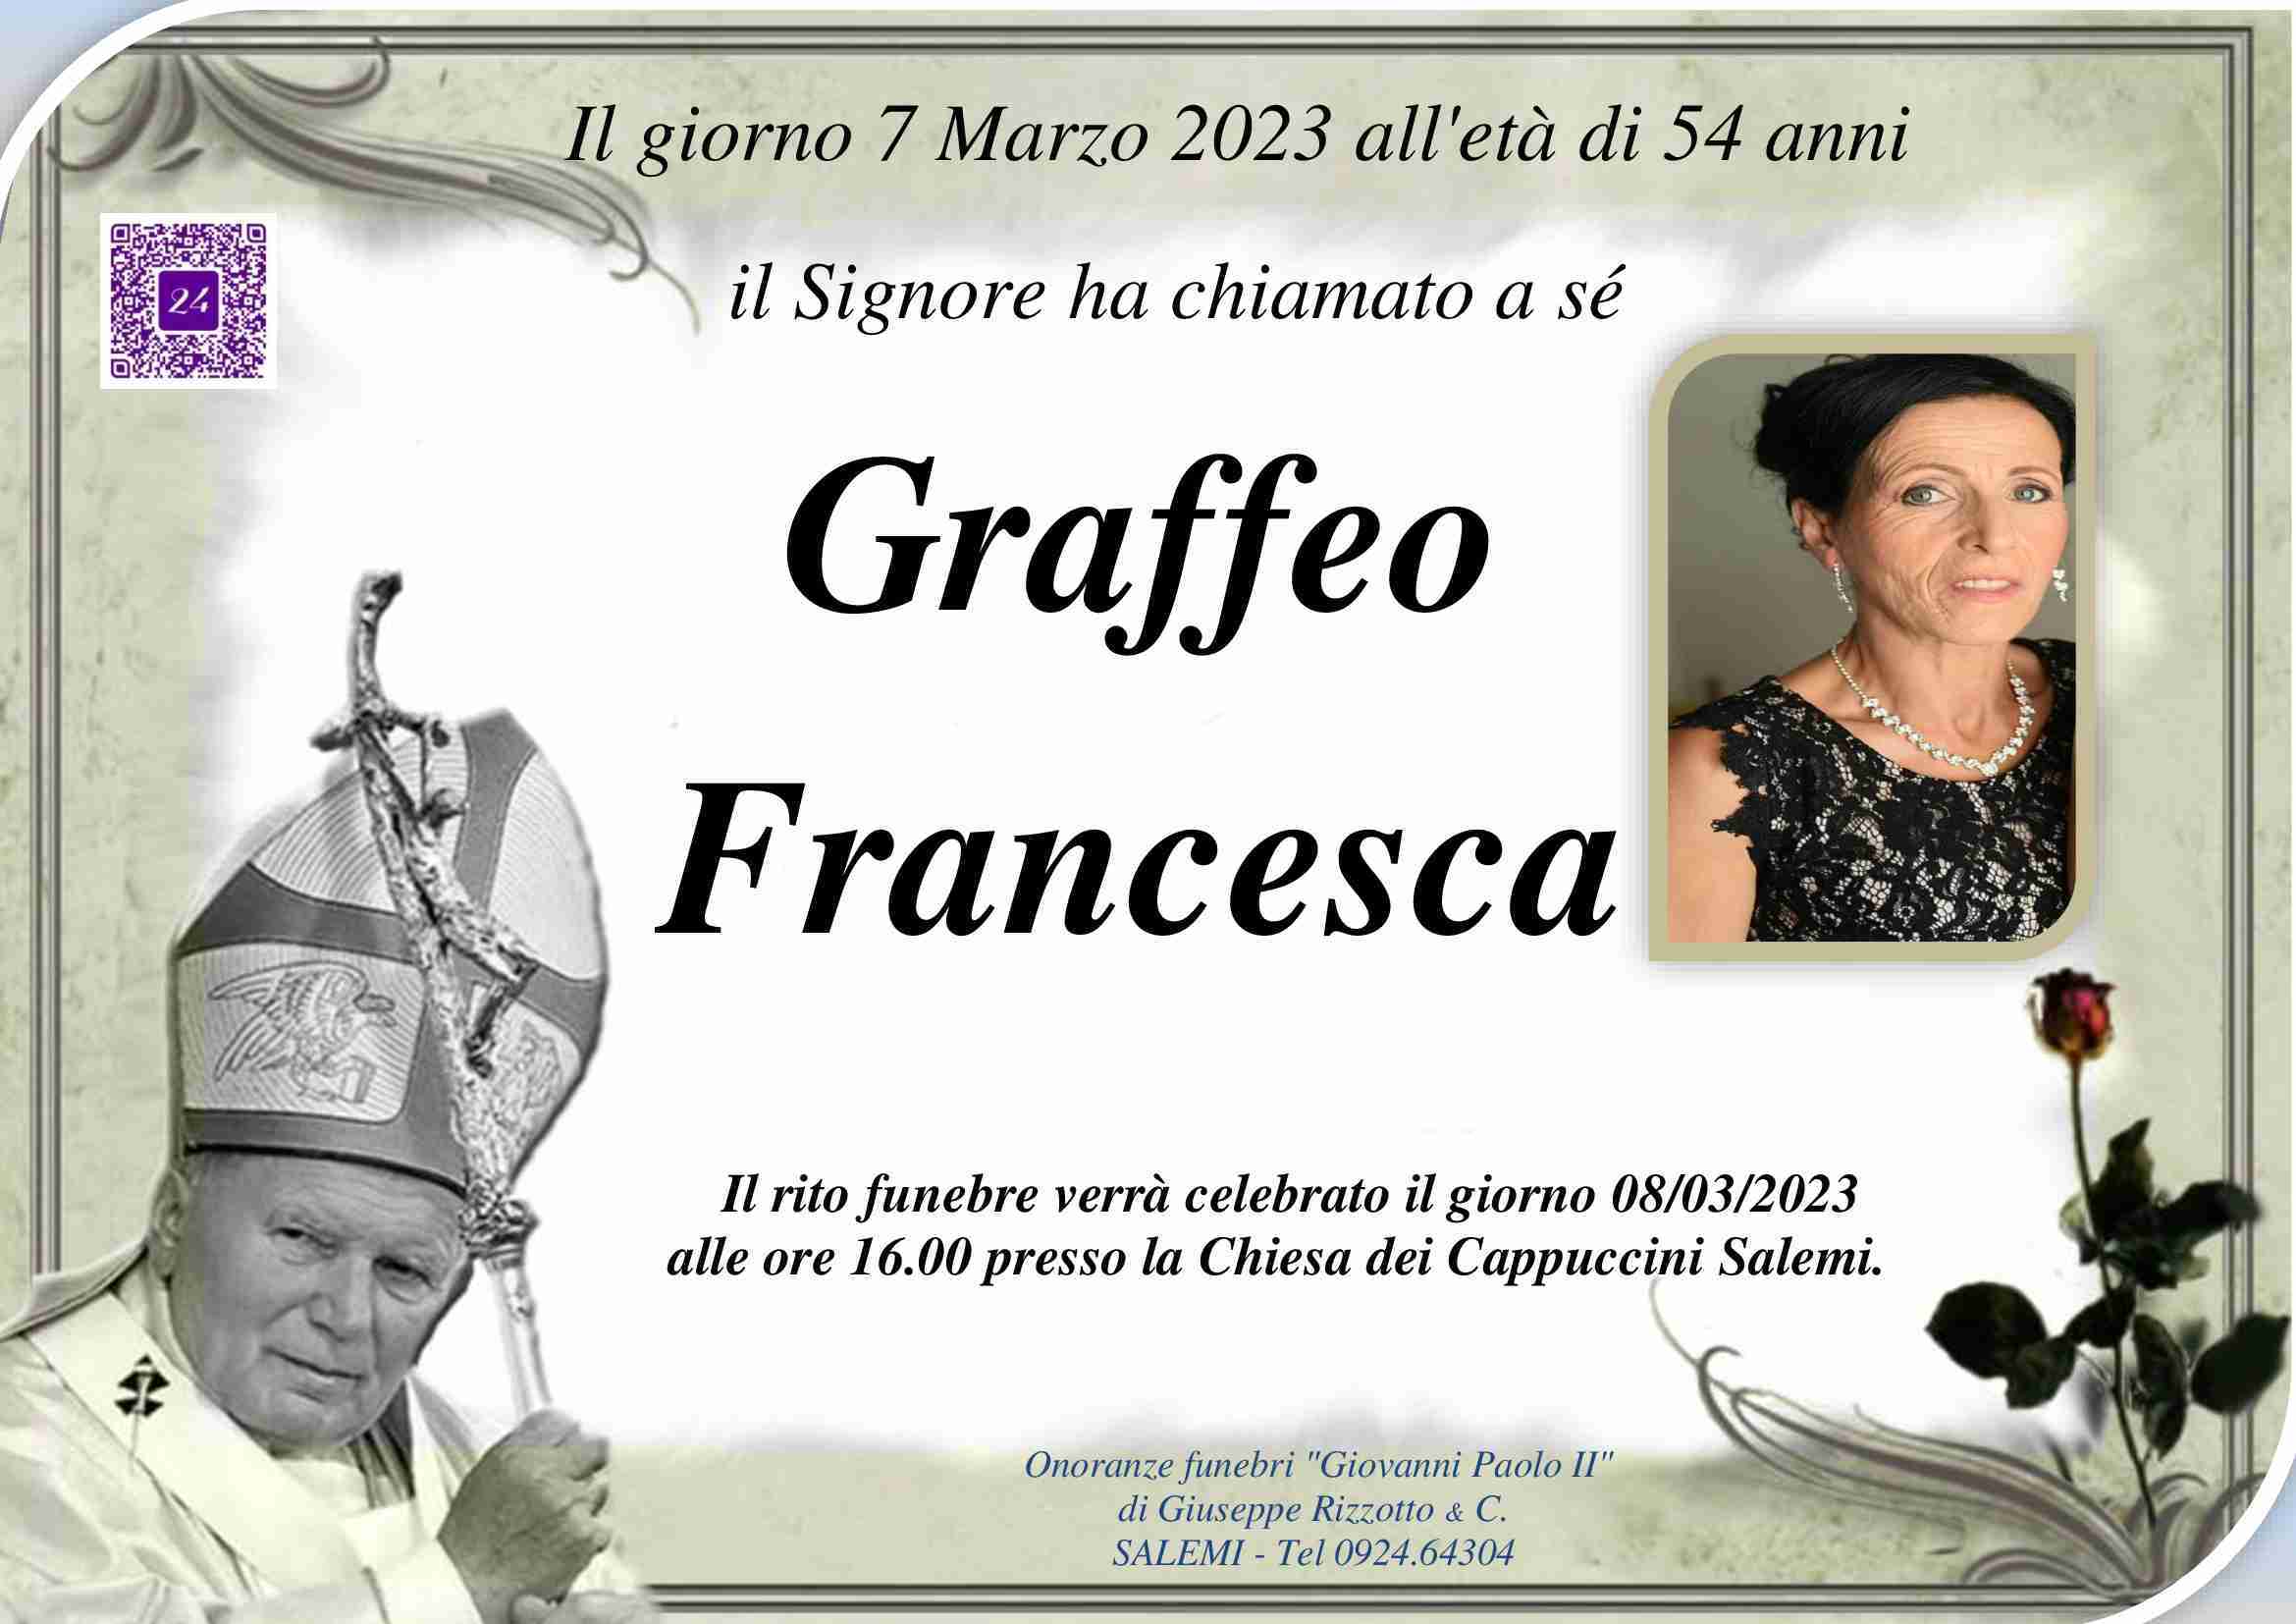 Francesca Graffeo